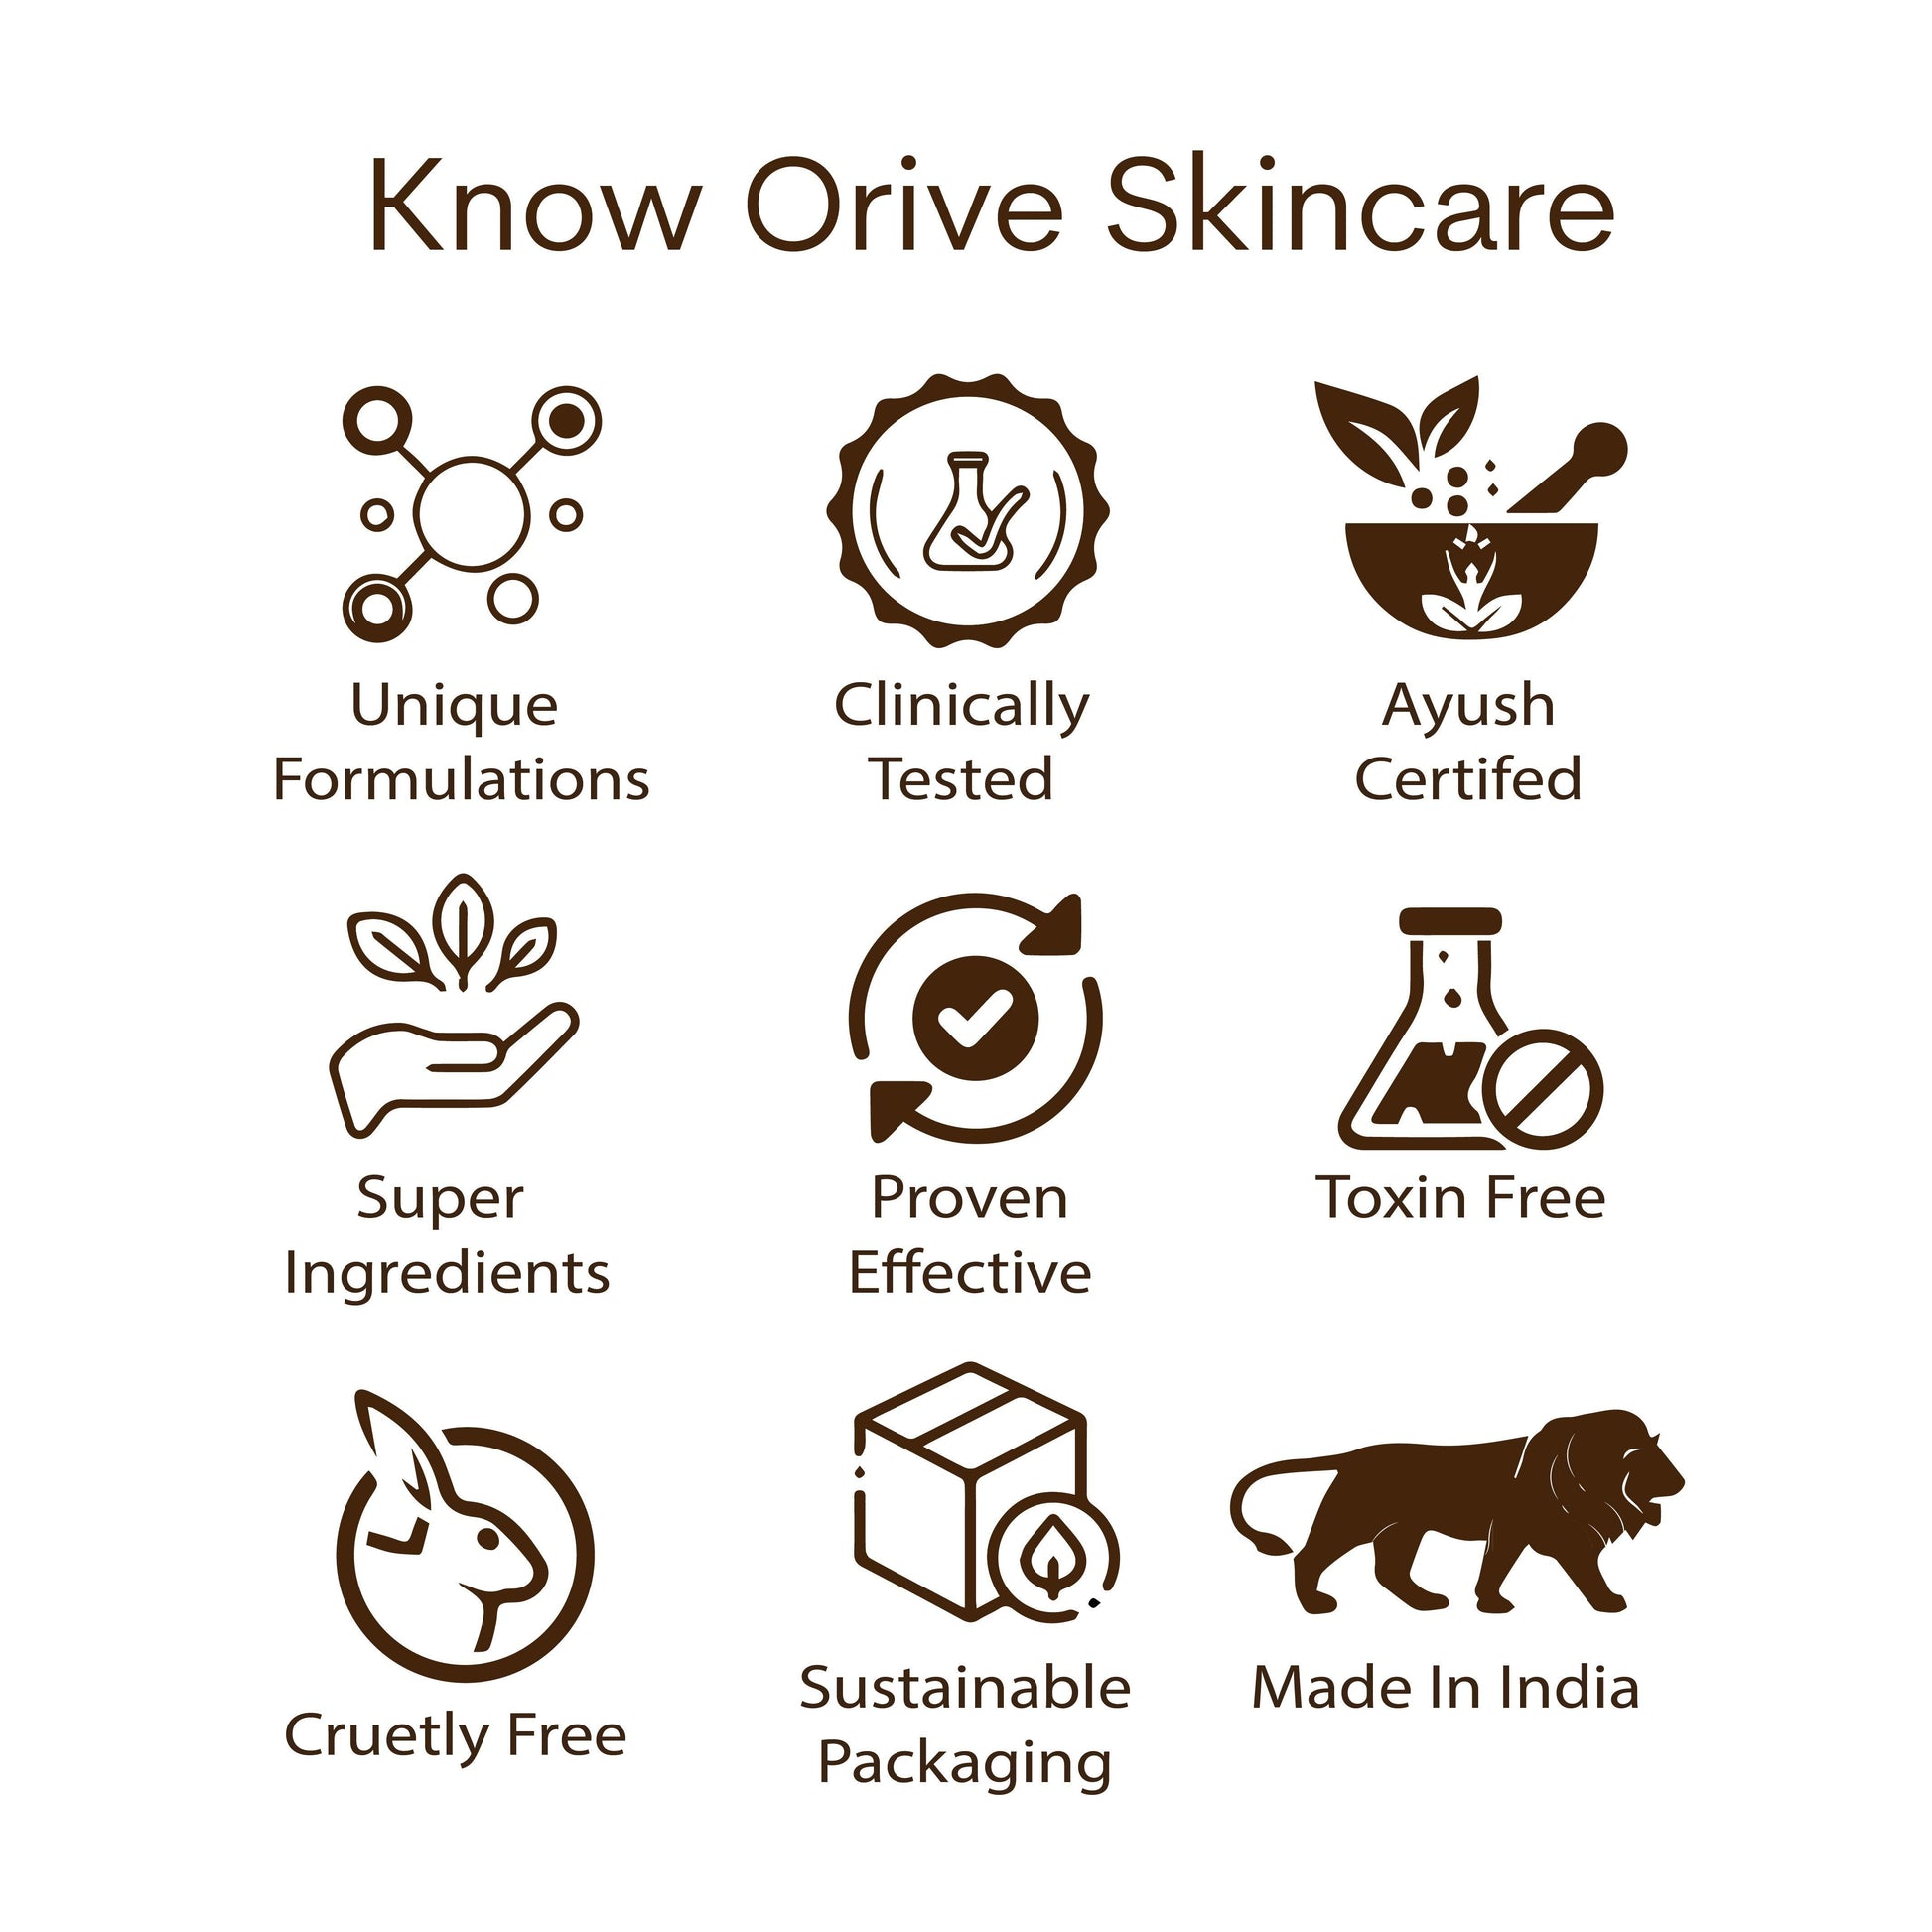 Mini Clear | Facial Mist | Oily/Acne prone Skin - Orive Organics